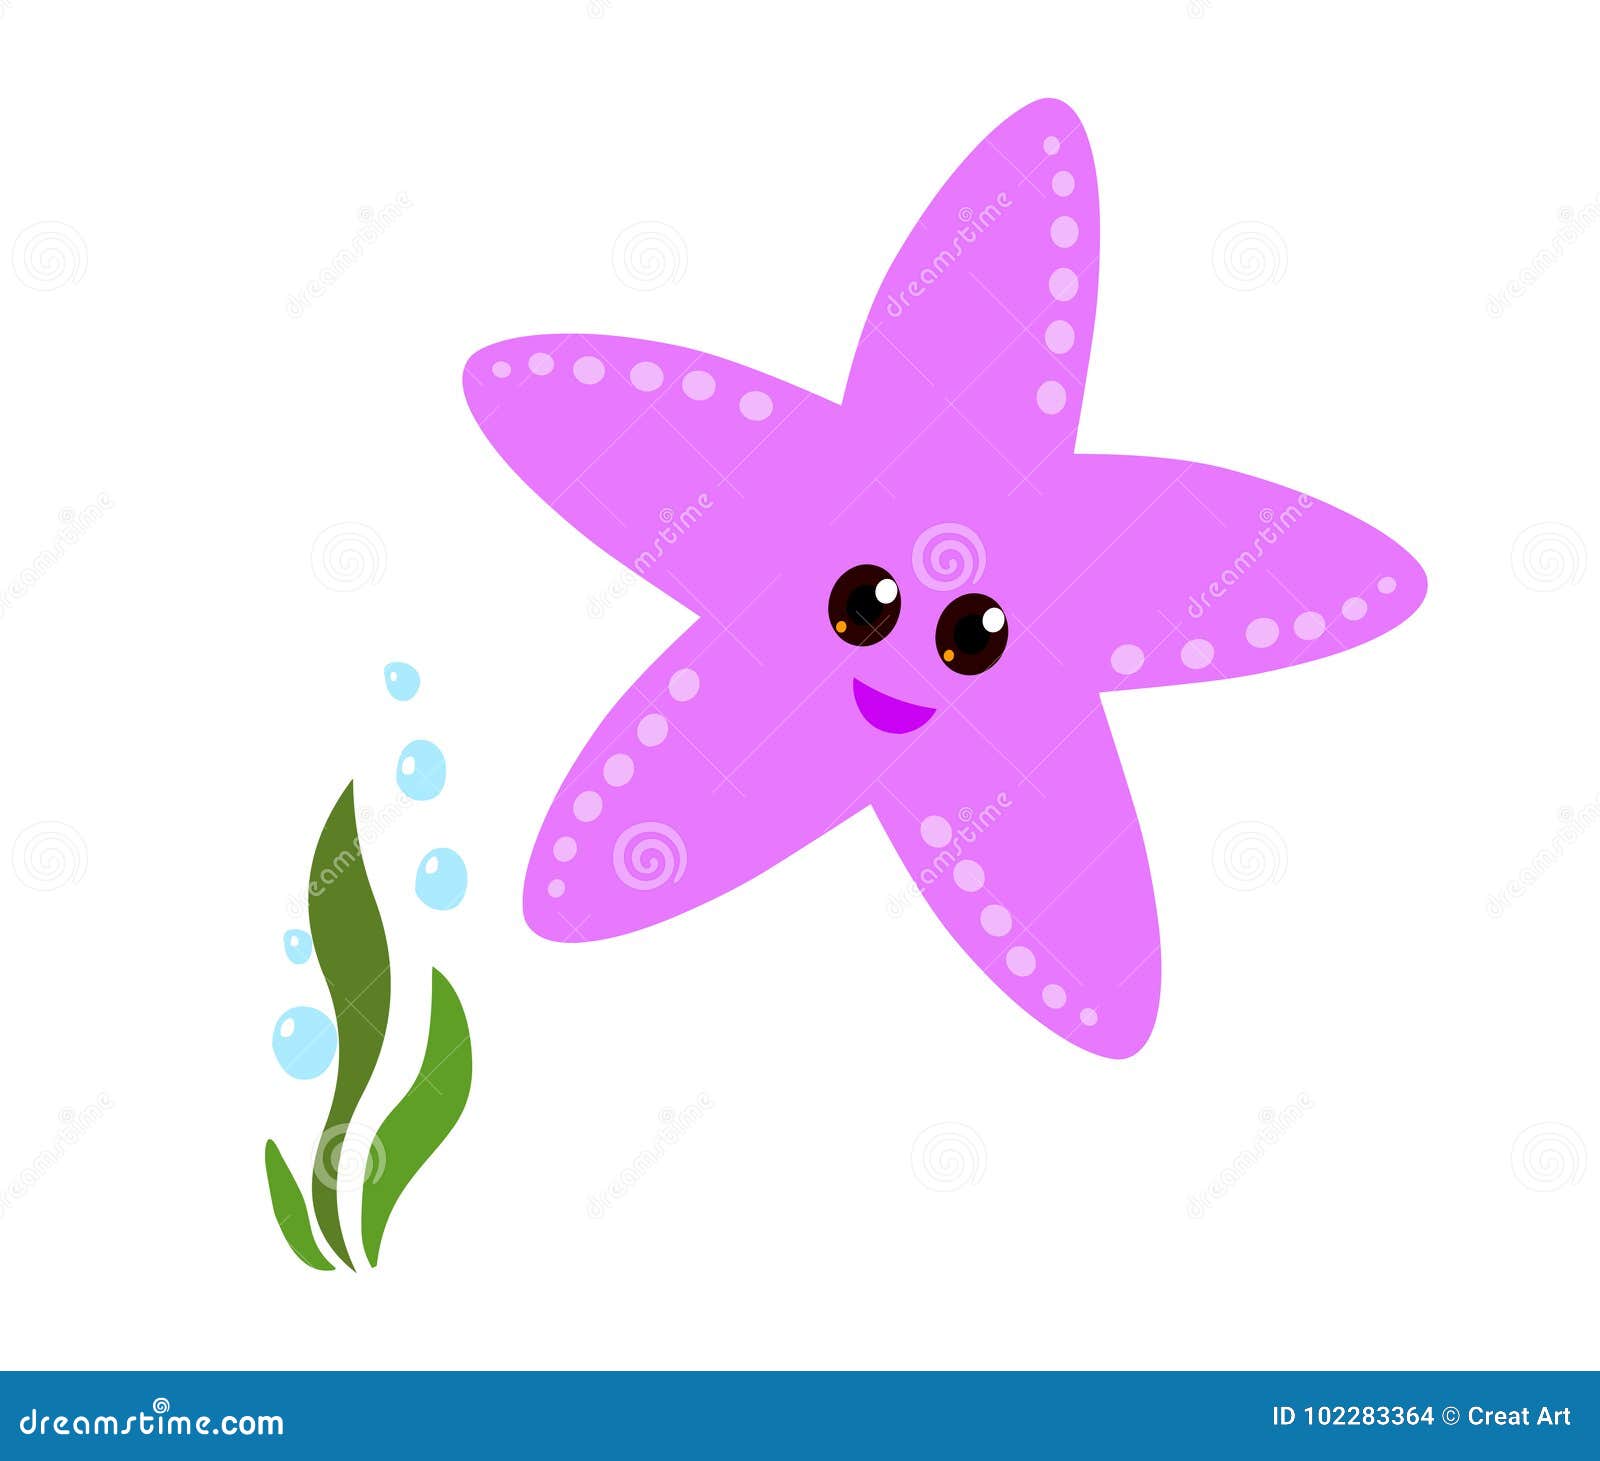 Star fish cartoon stock illustration. Illustration of animal - 102283364